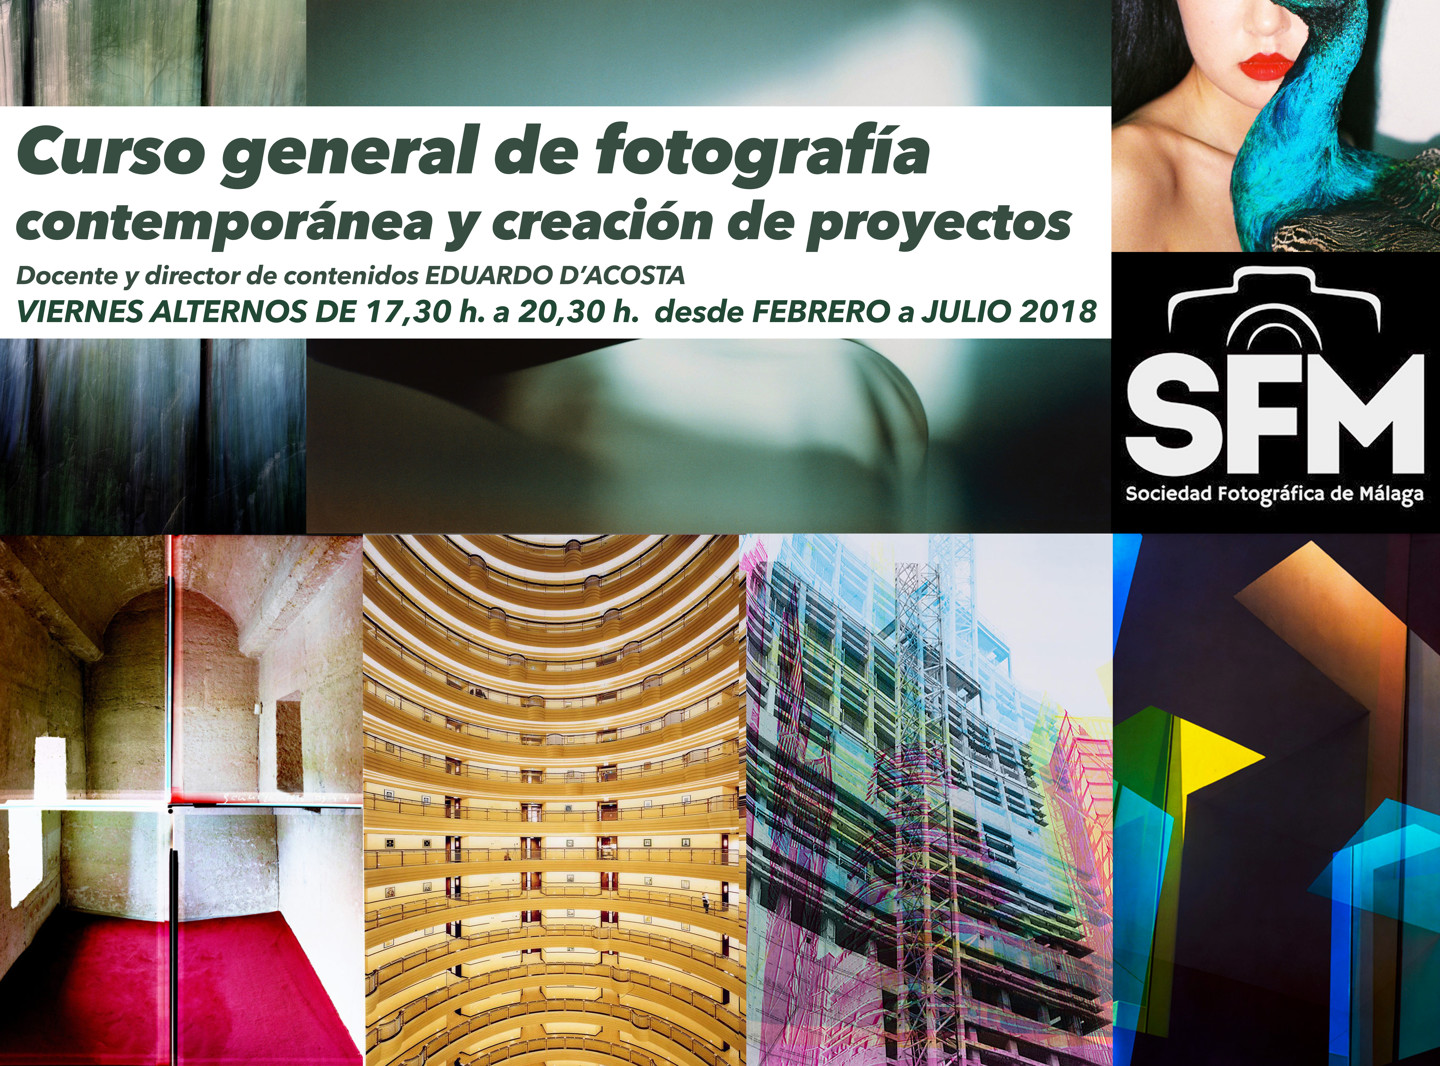 Sociedad Fotográfica de Málaga (SFM) - ddddd%20CARTEL%20SFM%20CURSO%20h%202018.jpg